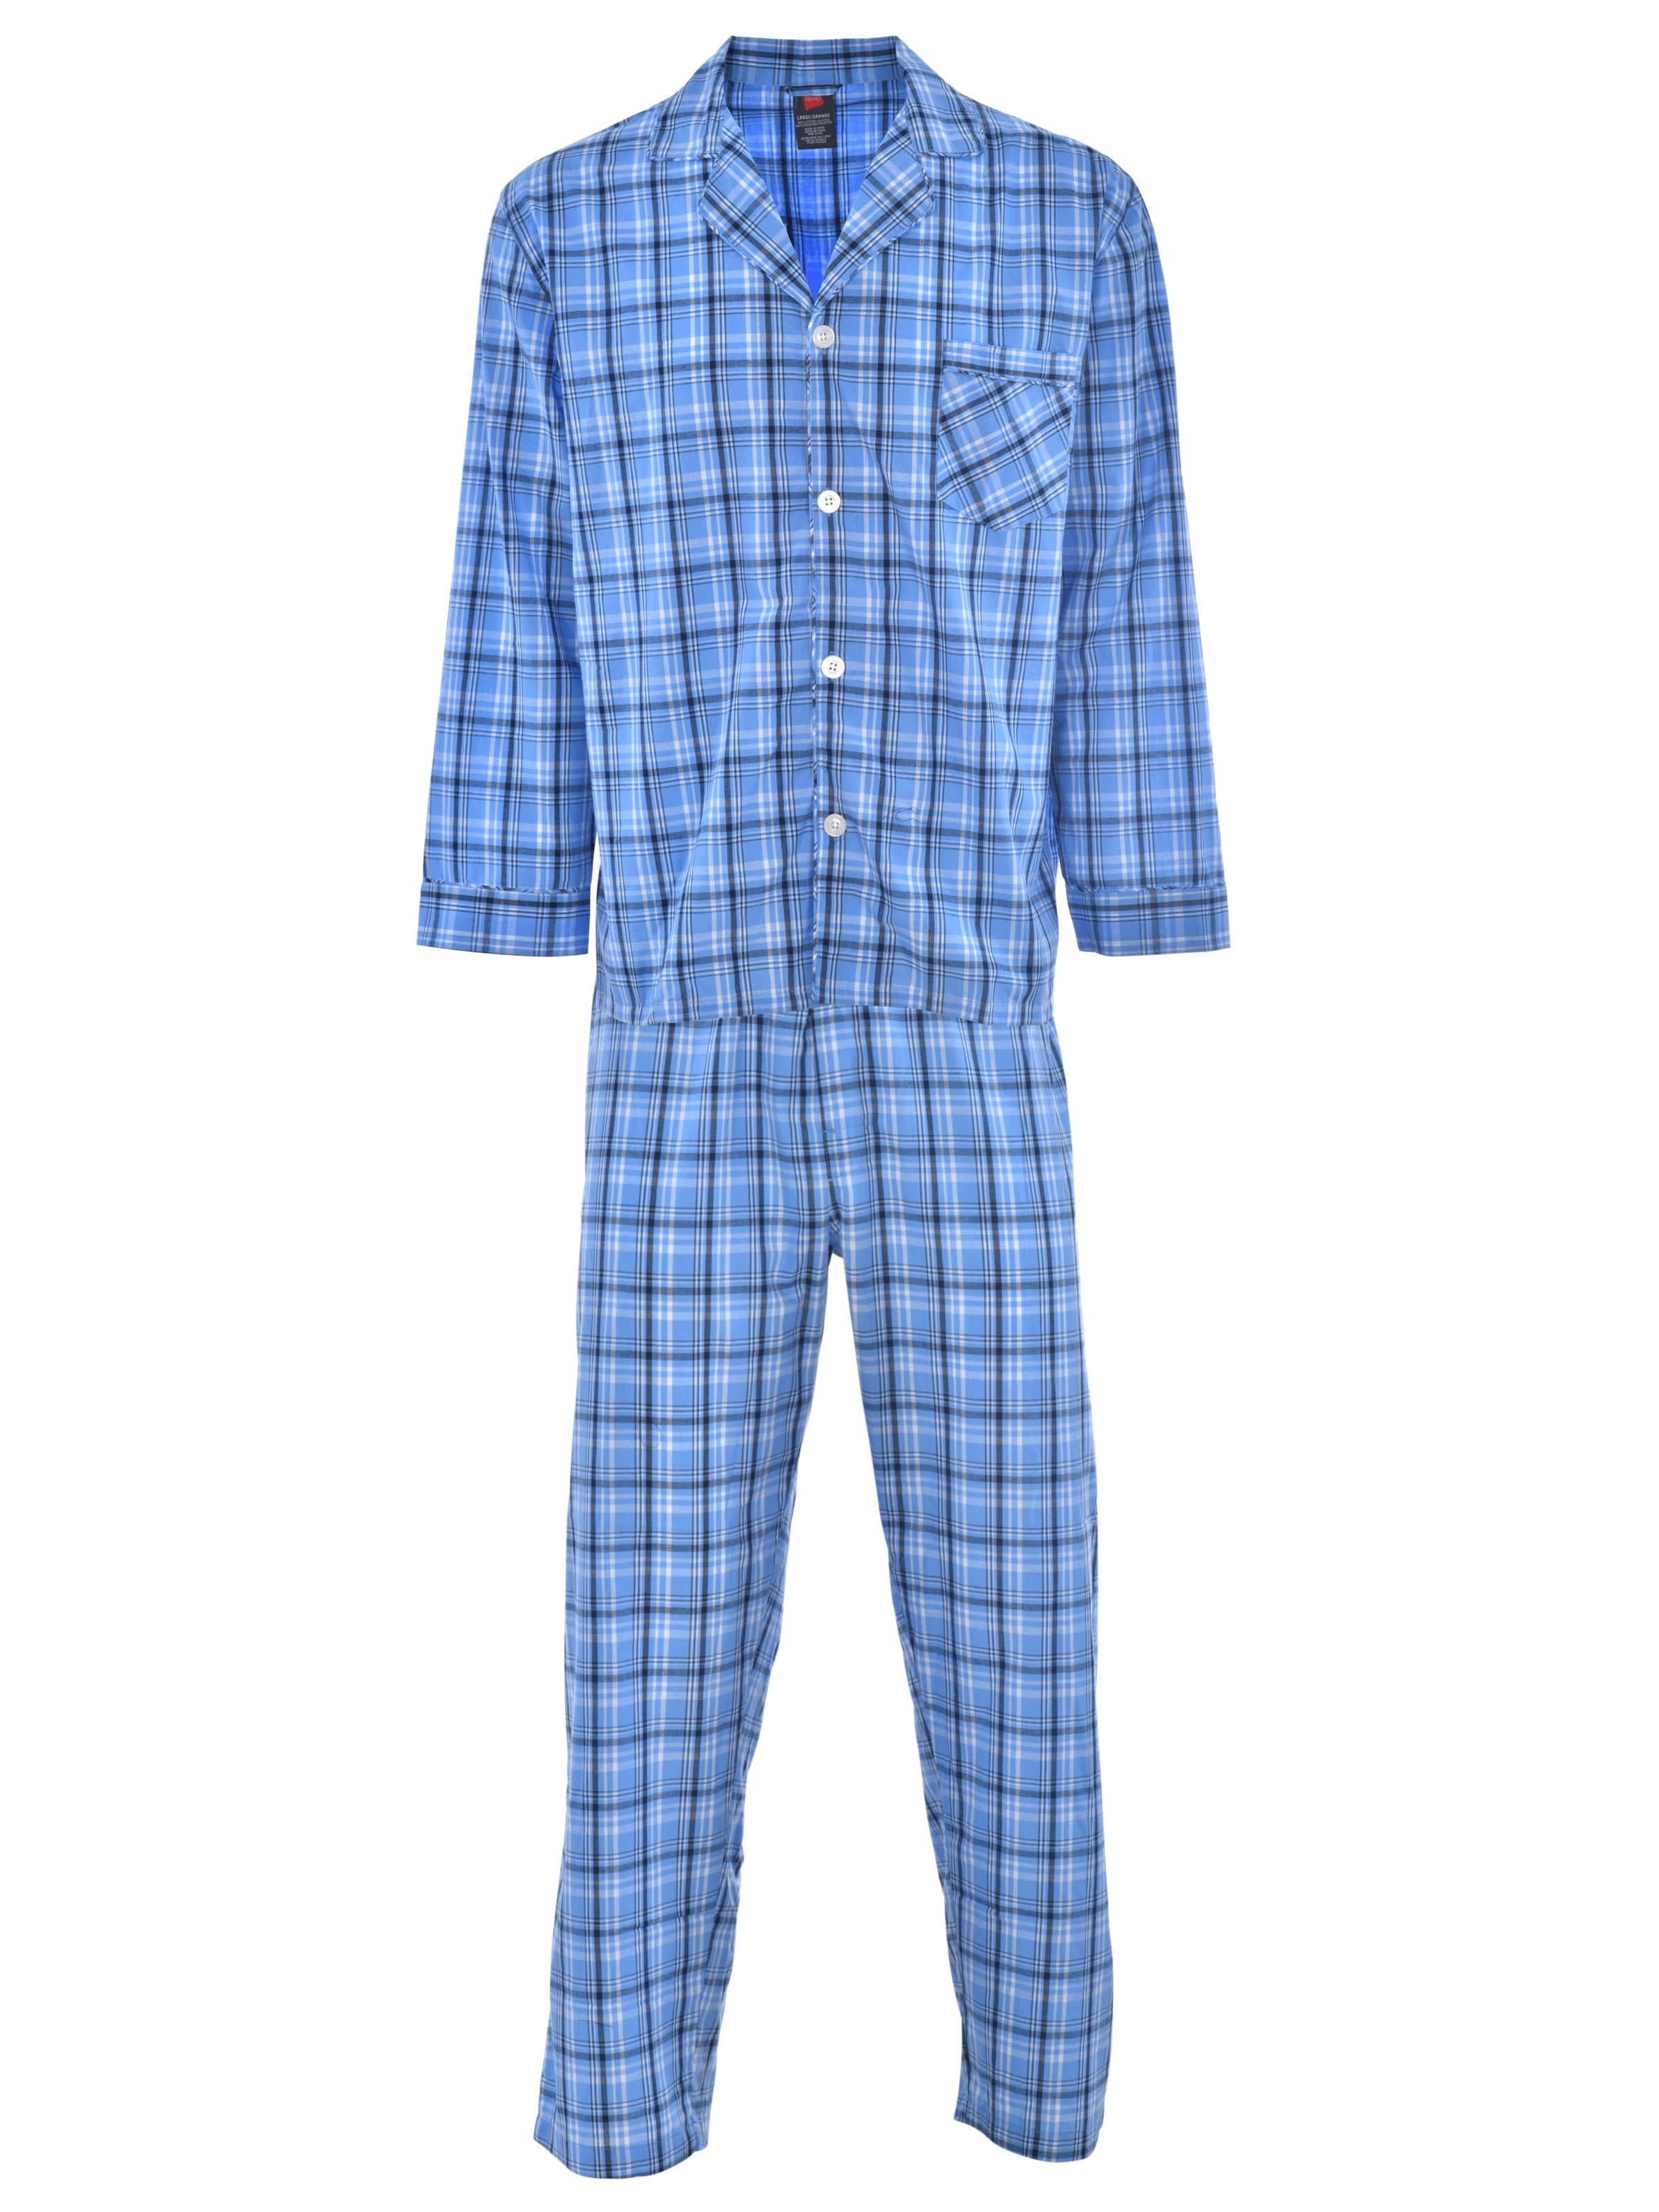 Hanes Ultimate Men's Pajama Set Big & Tall Broadcloth Blue Size 3XL NEW $60 